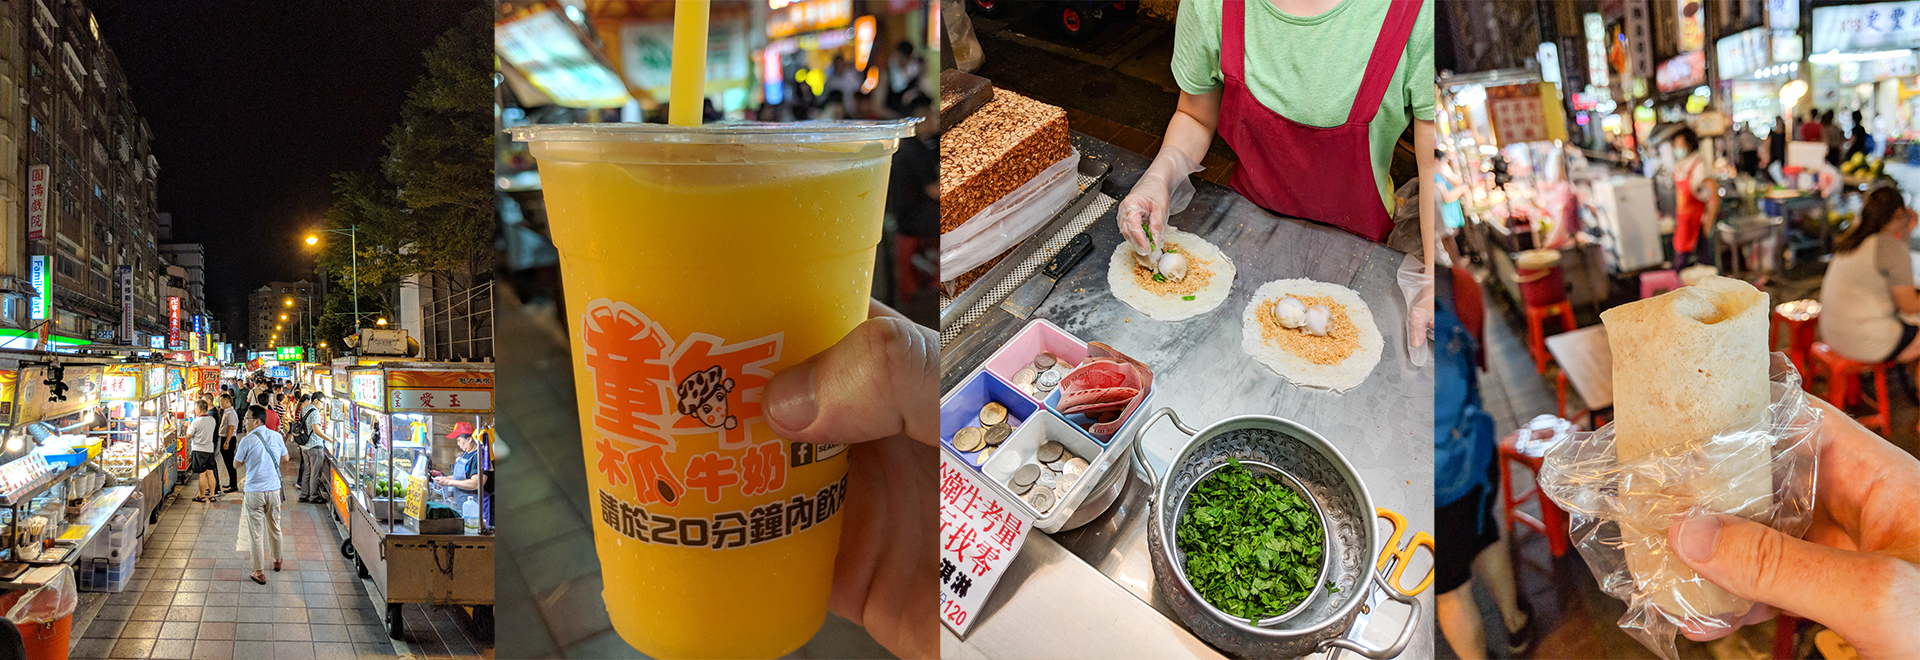 Taiwan Night Market food